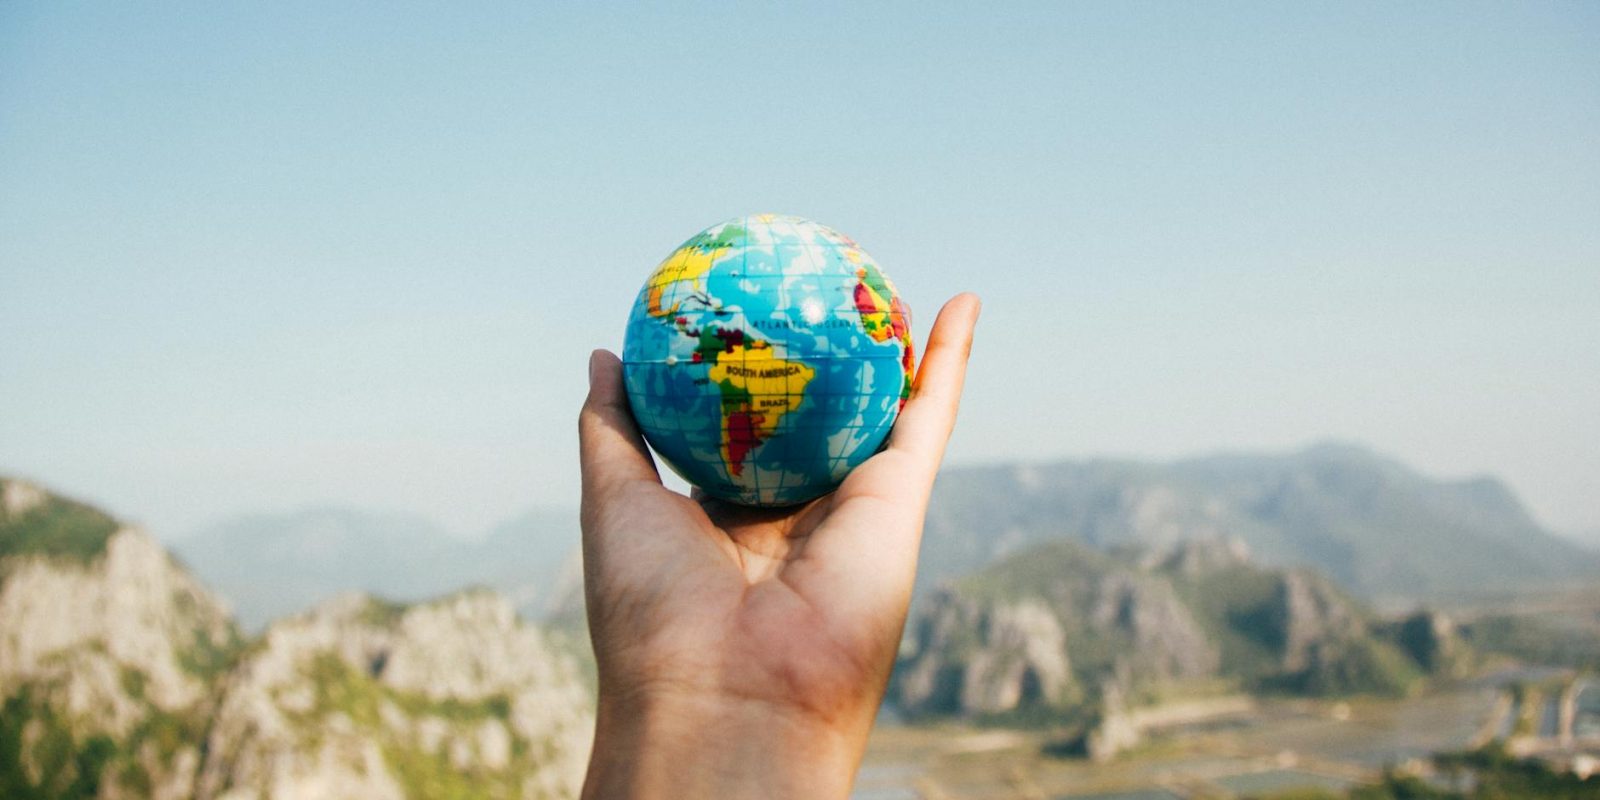 person holding world globe facing mountain